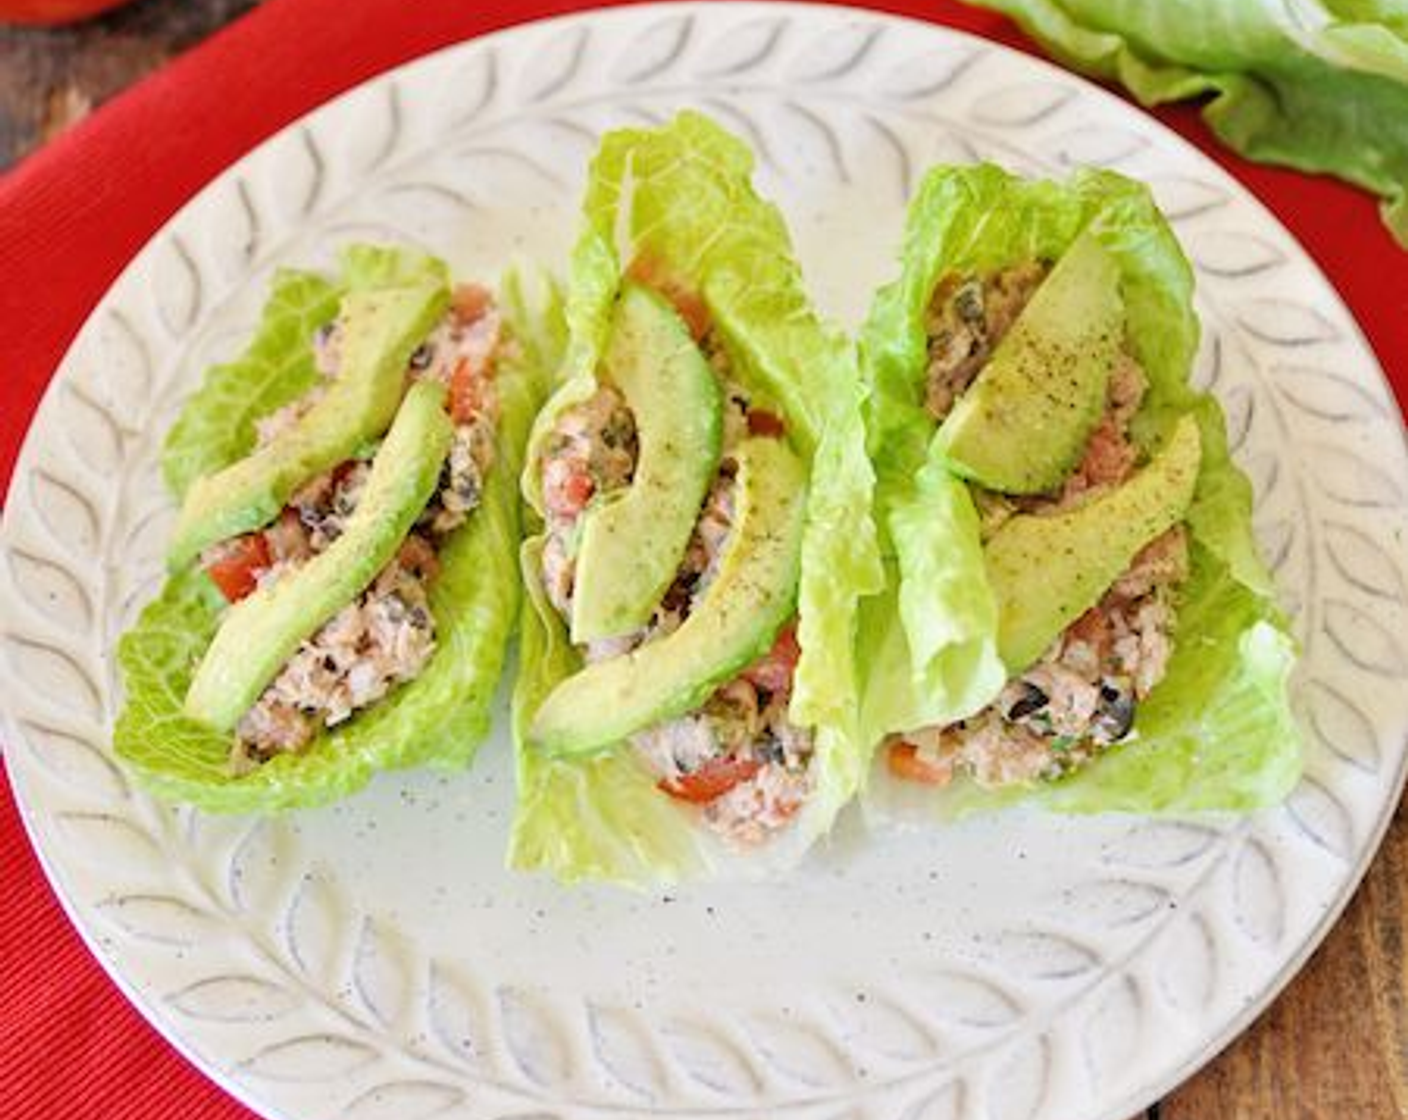 Lettuce Wraps with Spanish Tuna and Avocado